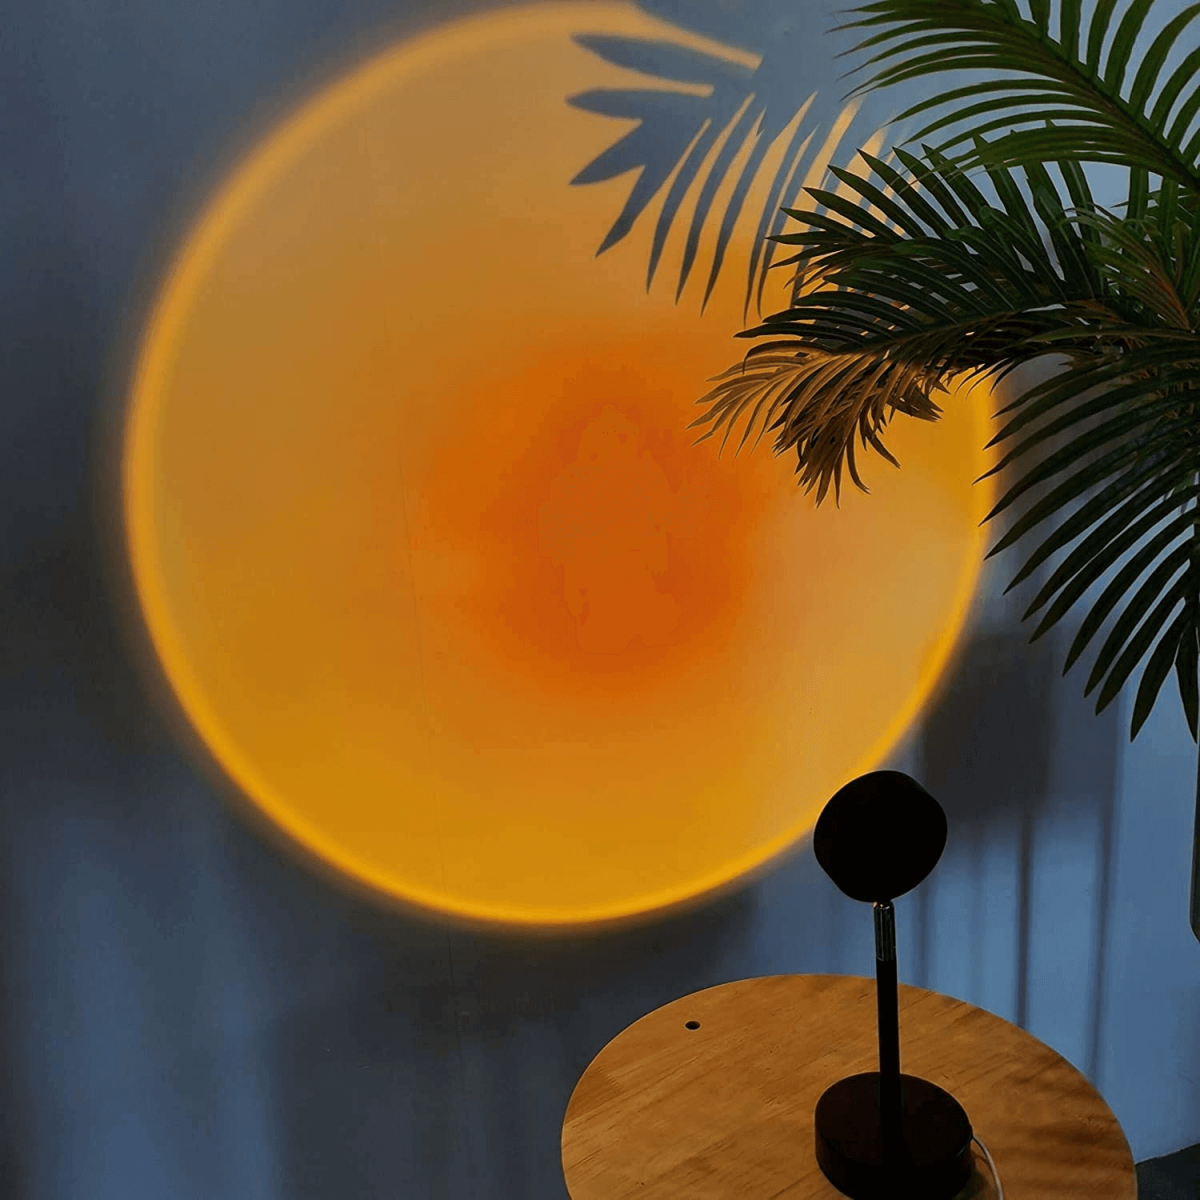 Remote Control Sunset Atmosphere LED Lamp - MaviGadget